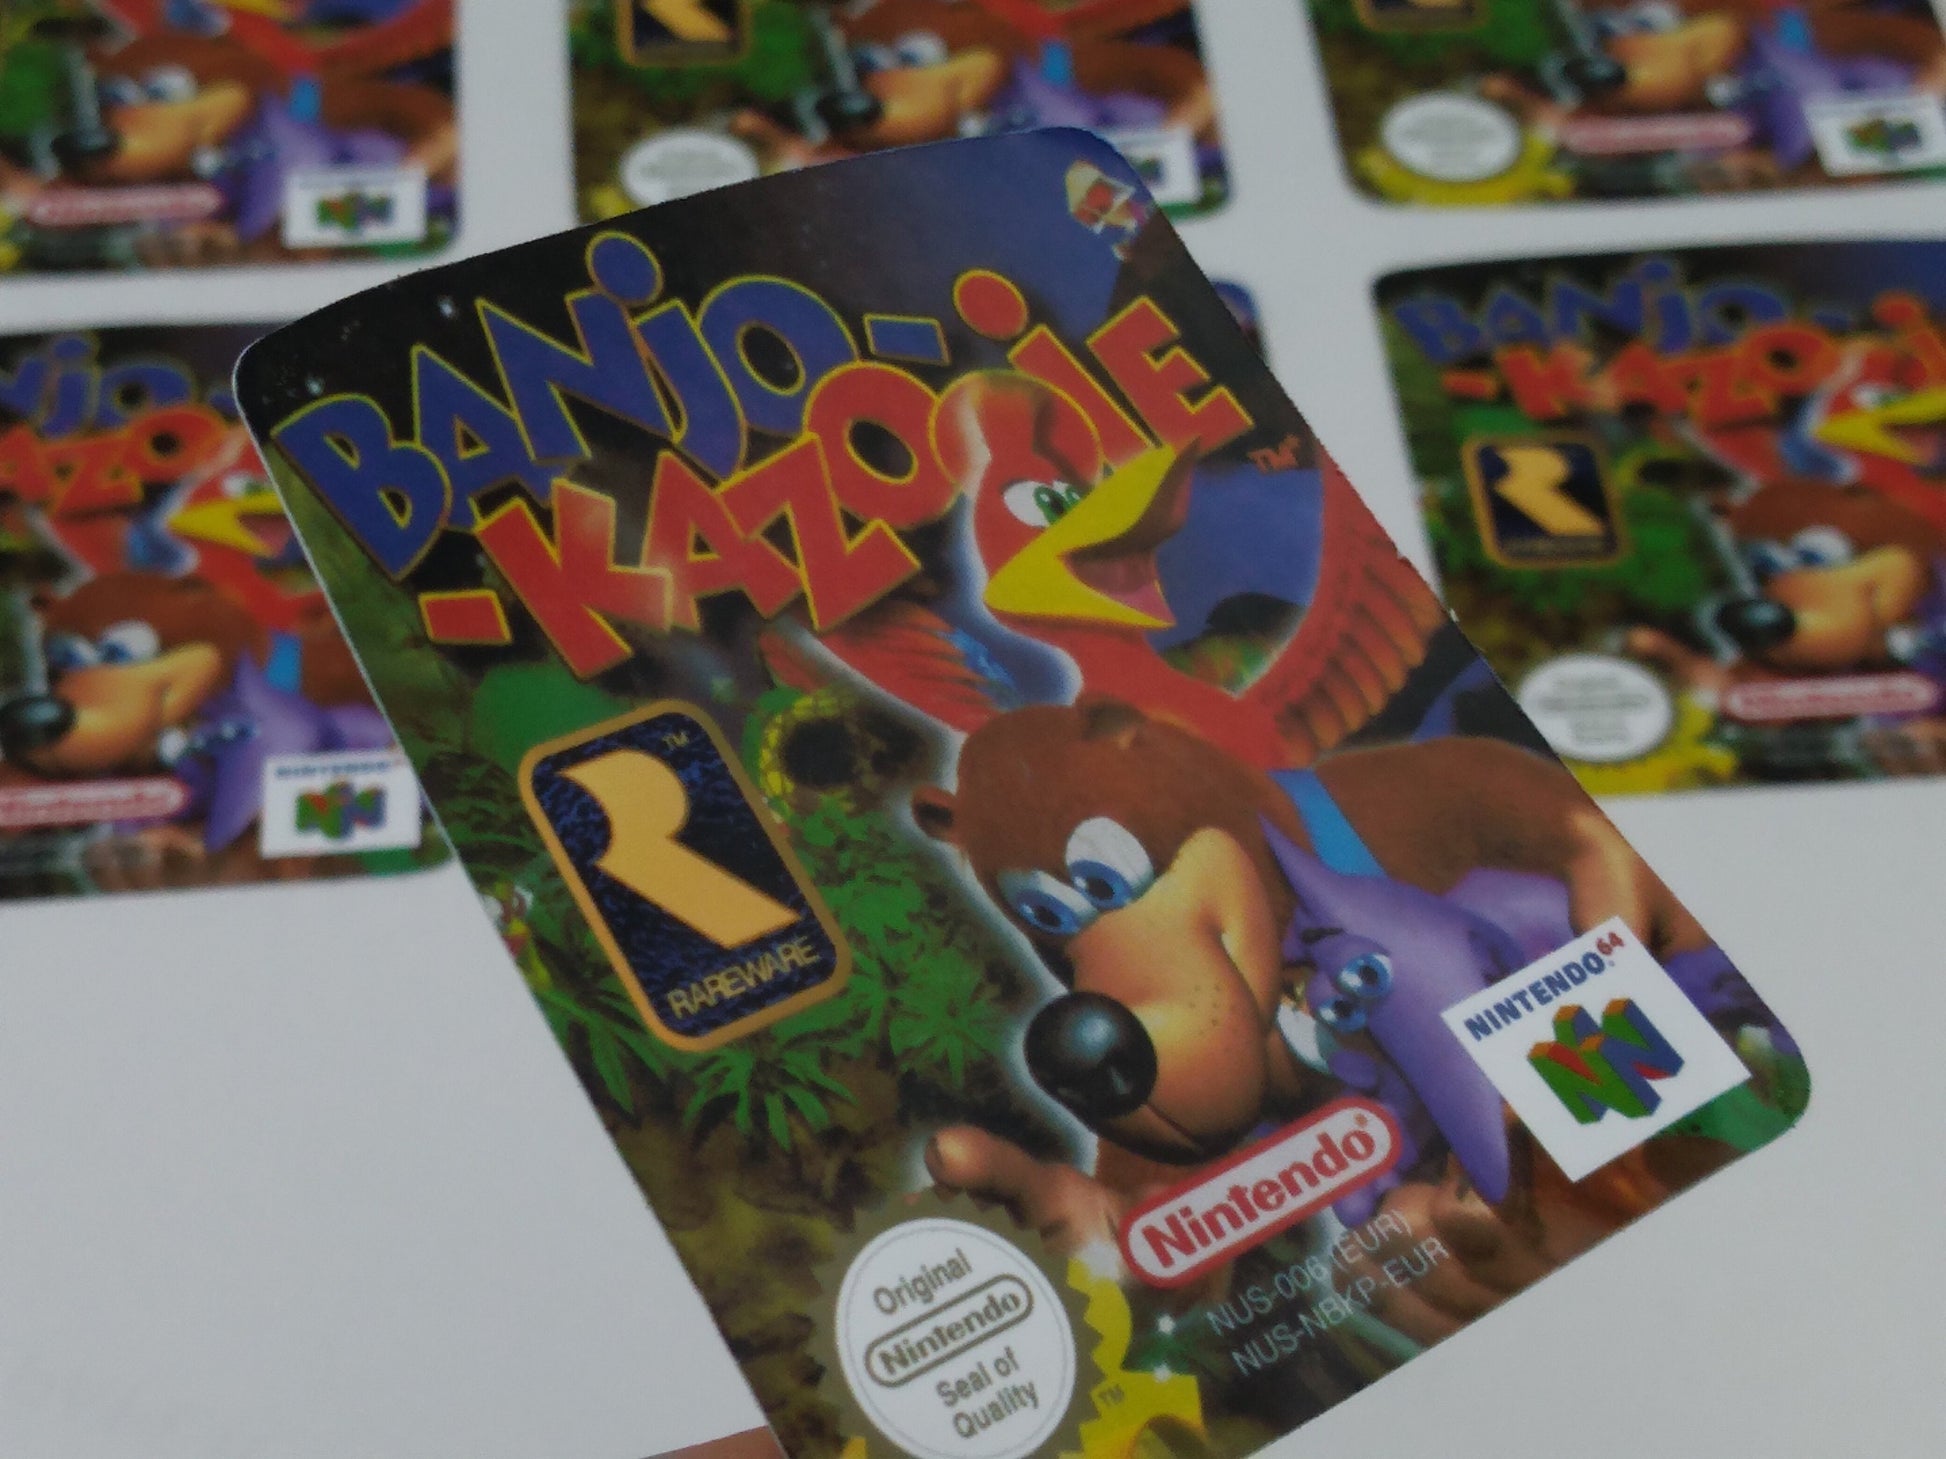 Banjo-Kazooie N64 Game Cartridges for N64 